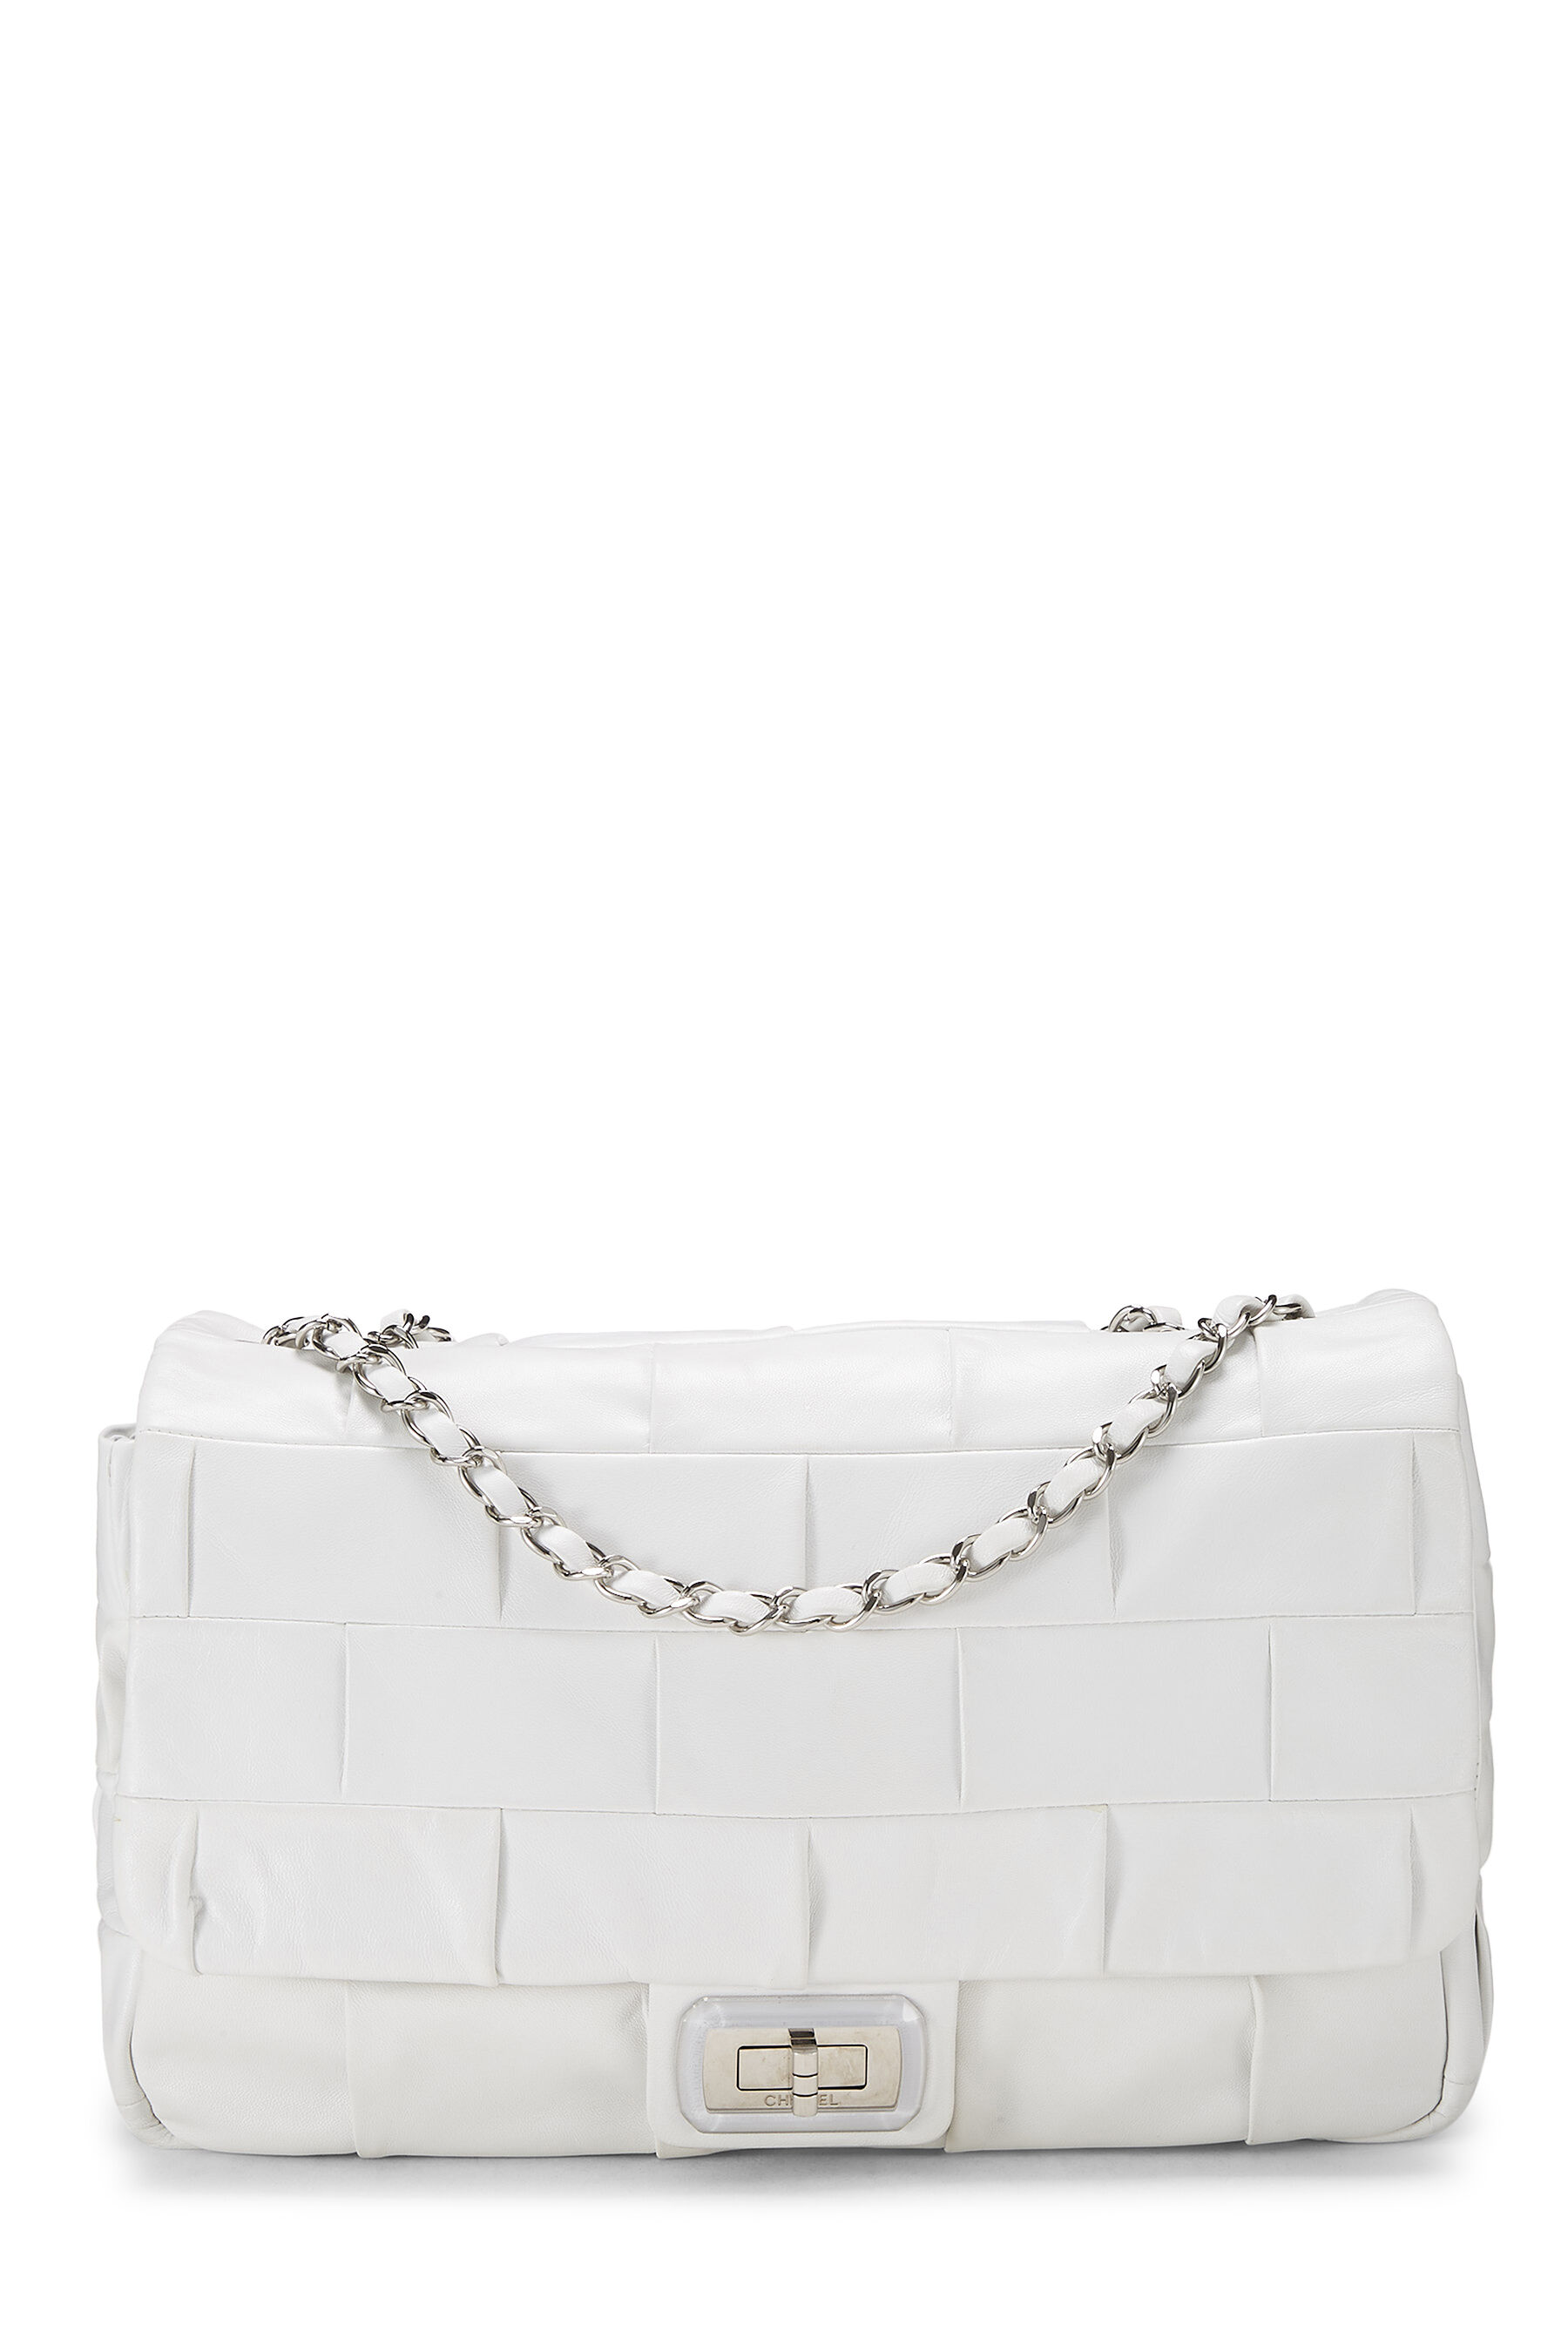 chanel white handbag new